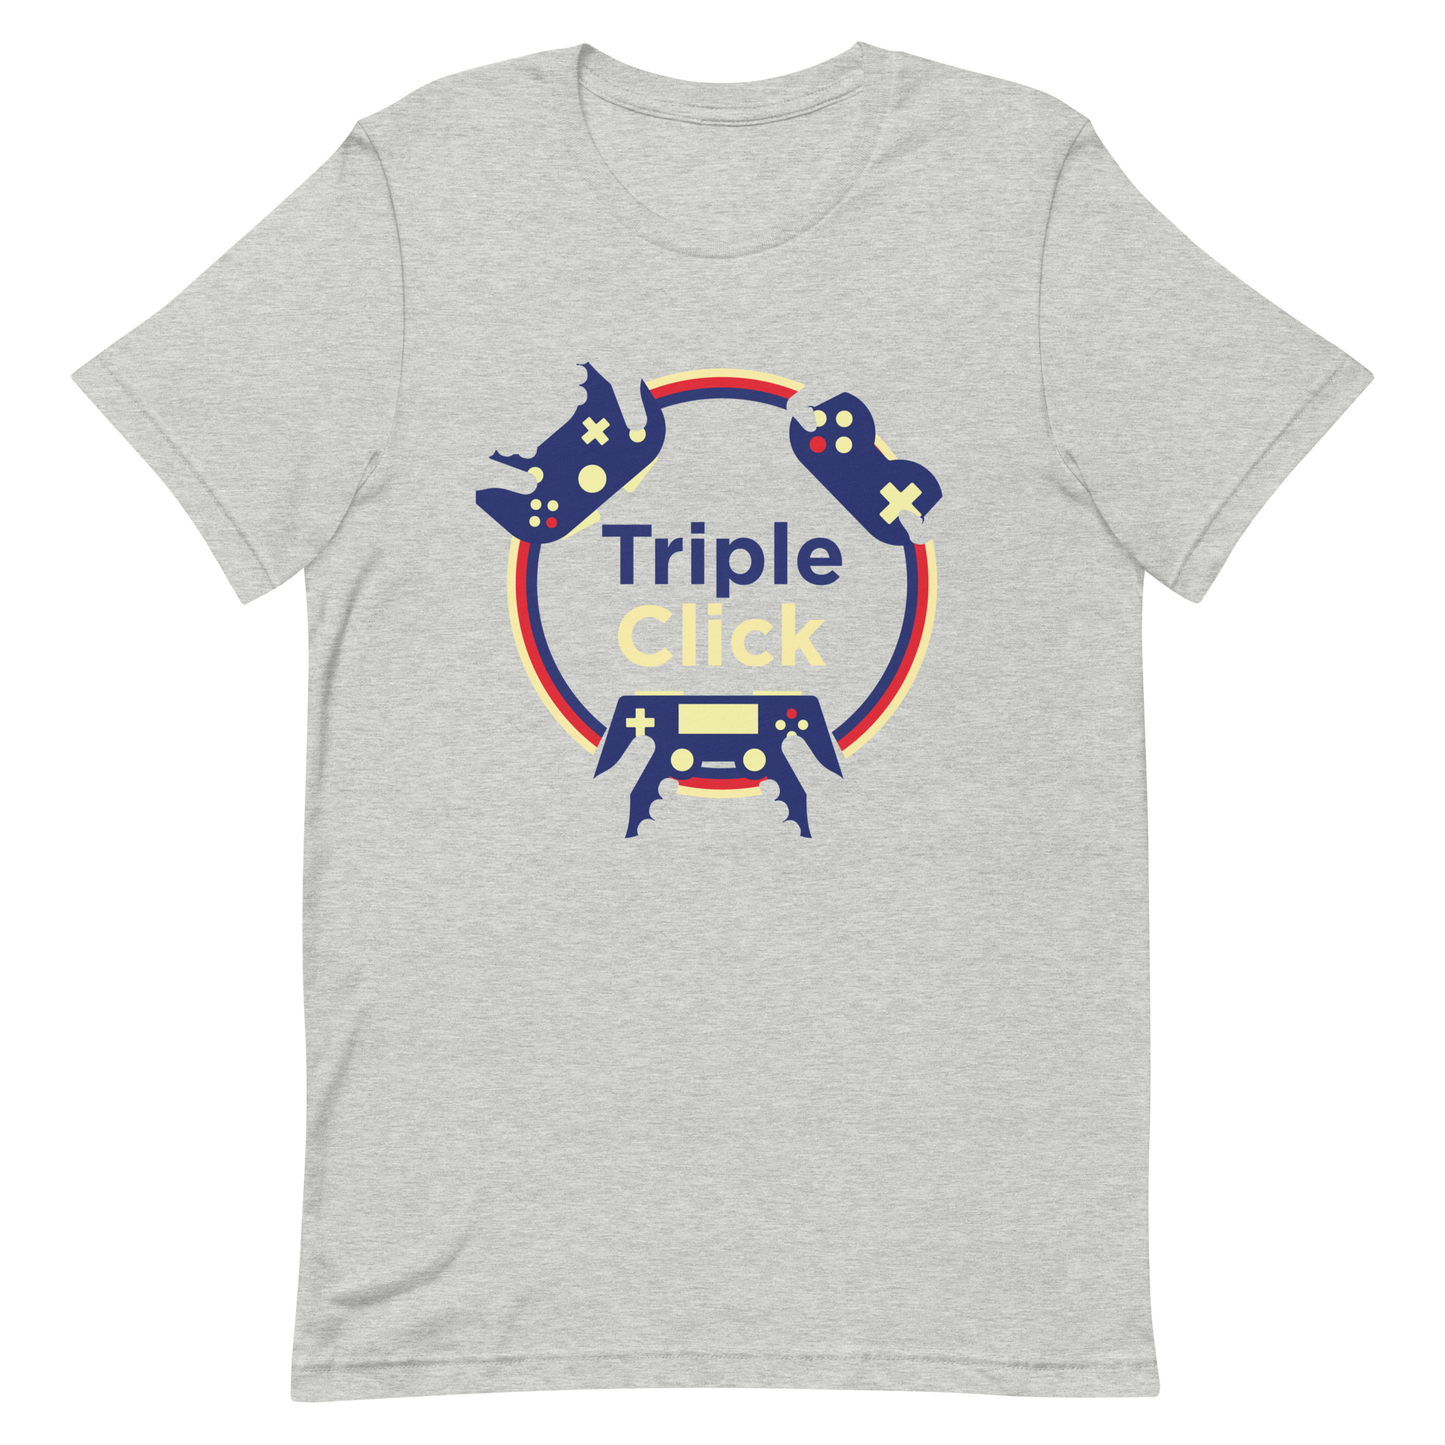 Triple Click logo T-shirt